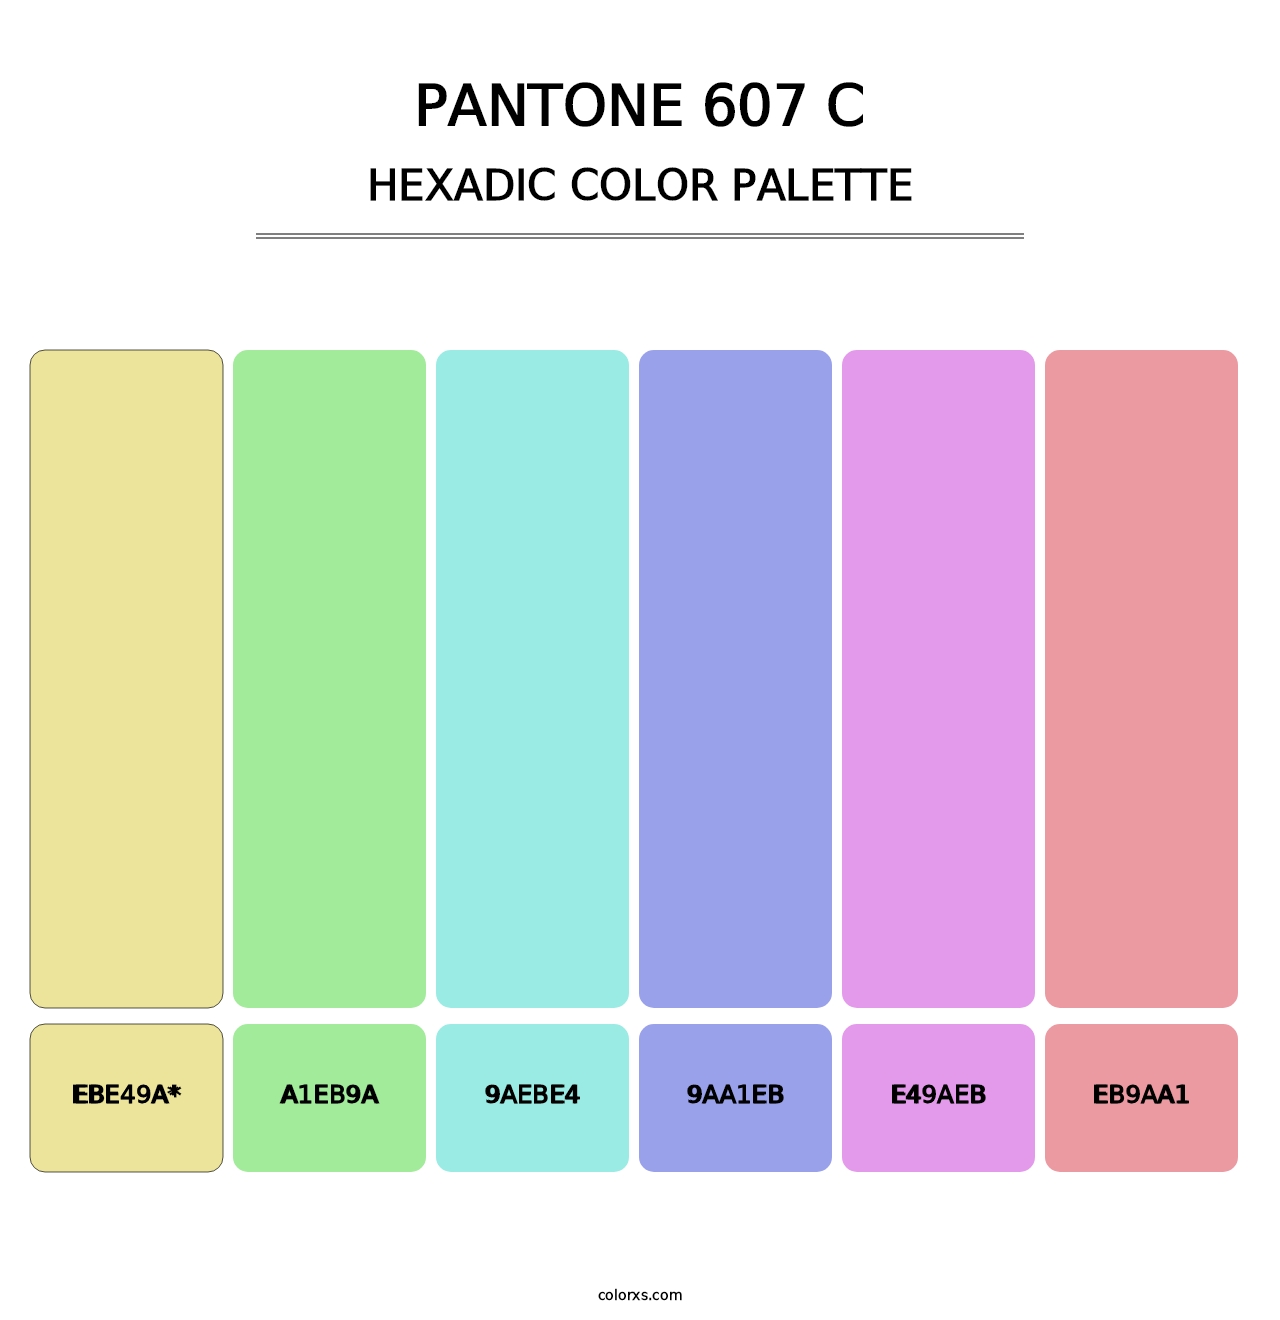 PANTONE 607 C - Hexadic Color Palette